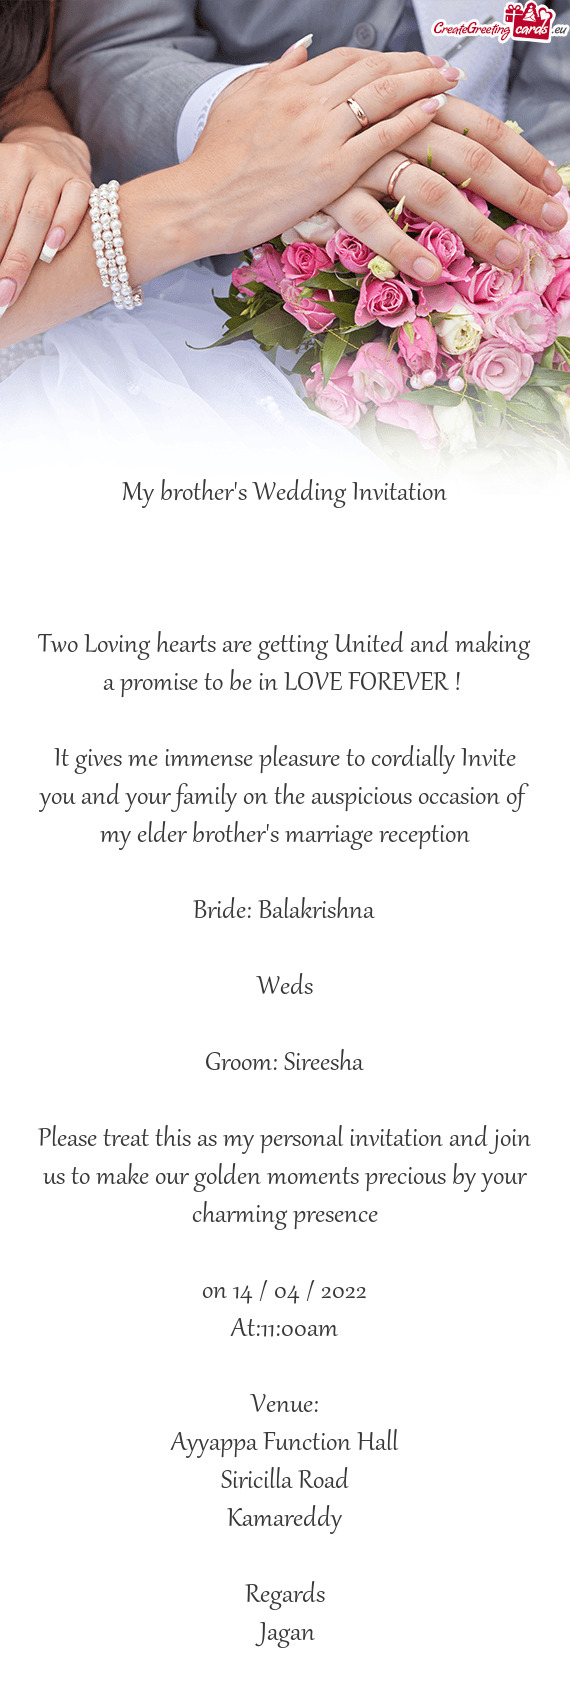 Bride: Balakrishna